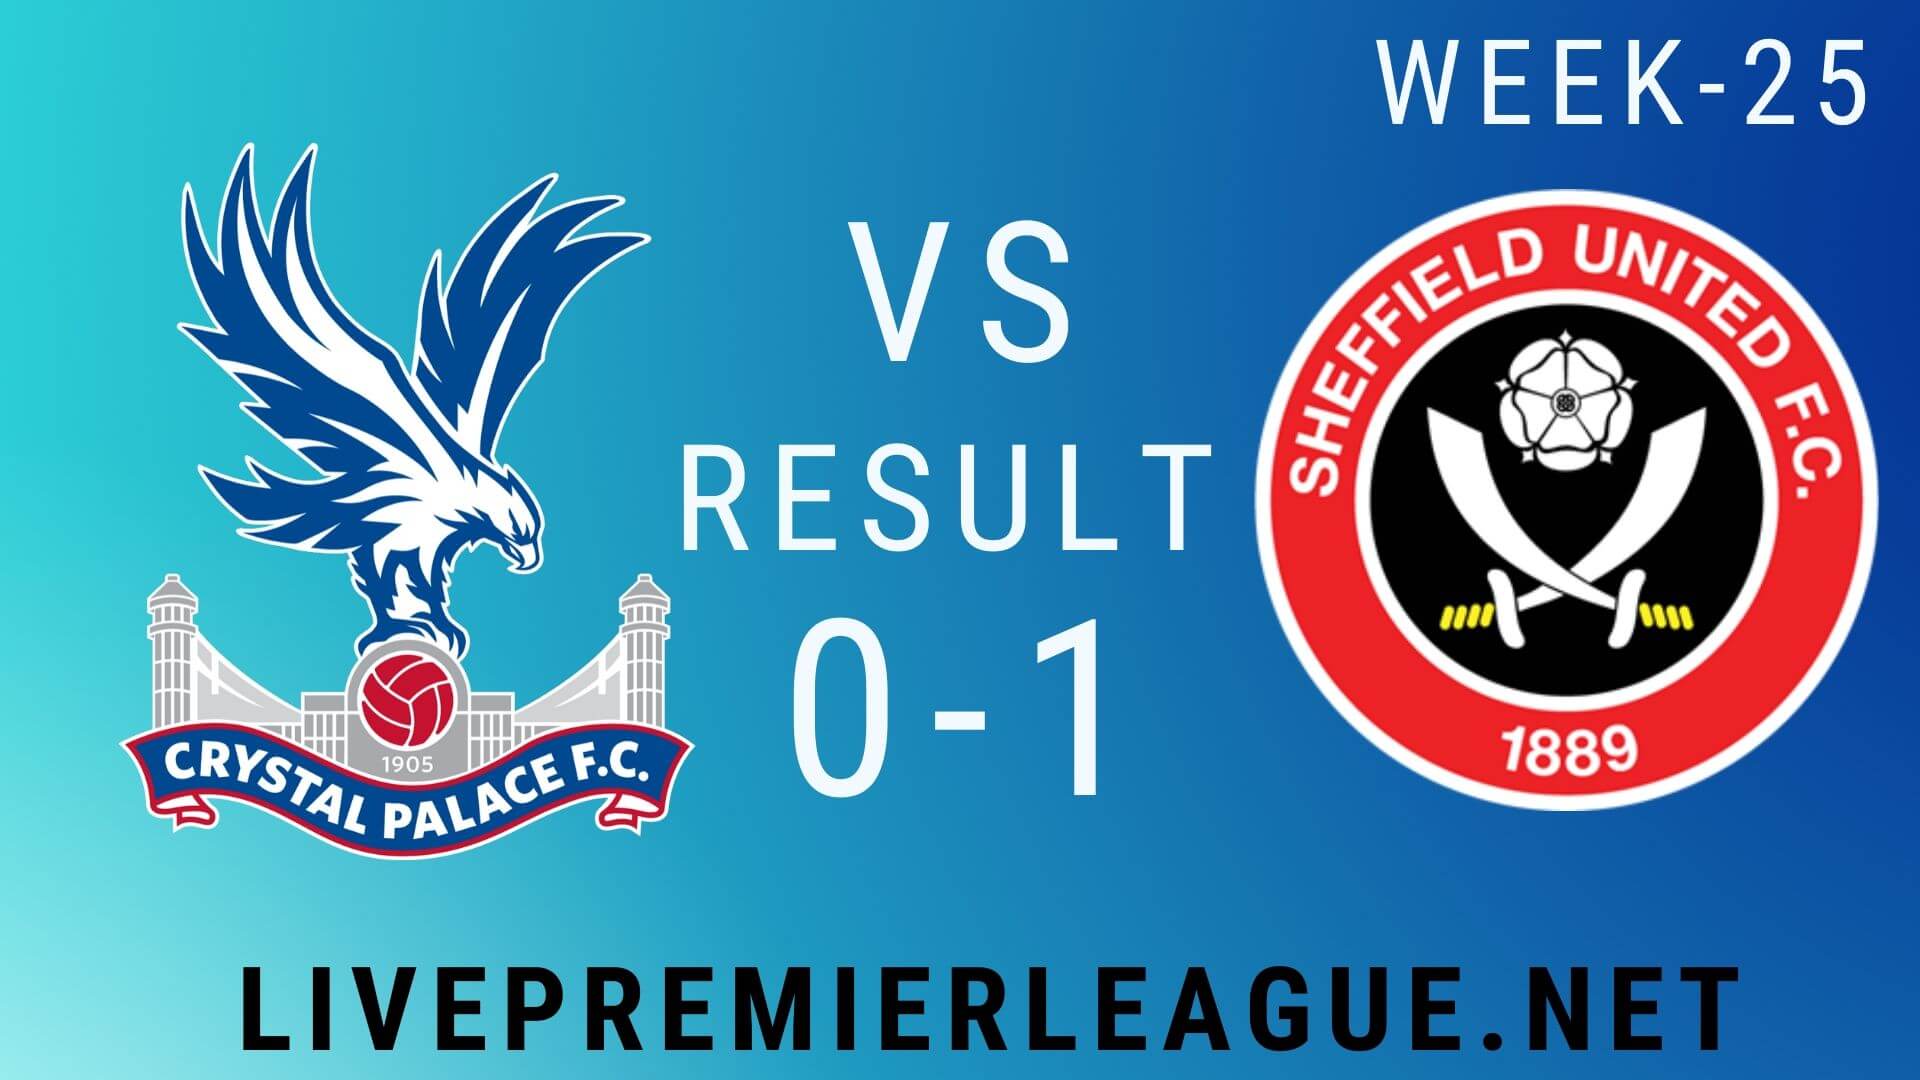 Crystal Palace Vs Sheffield United | Week 25 Result 2020